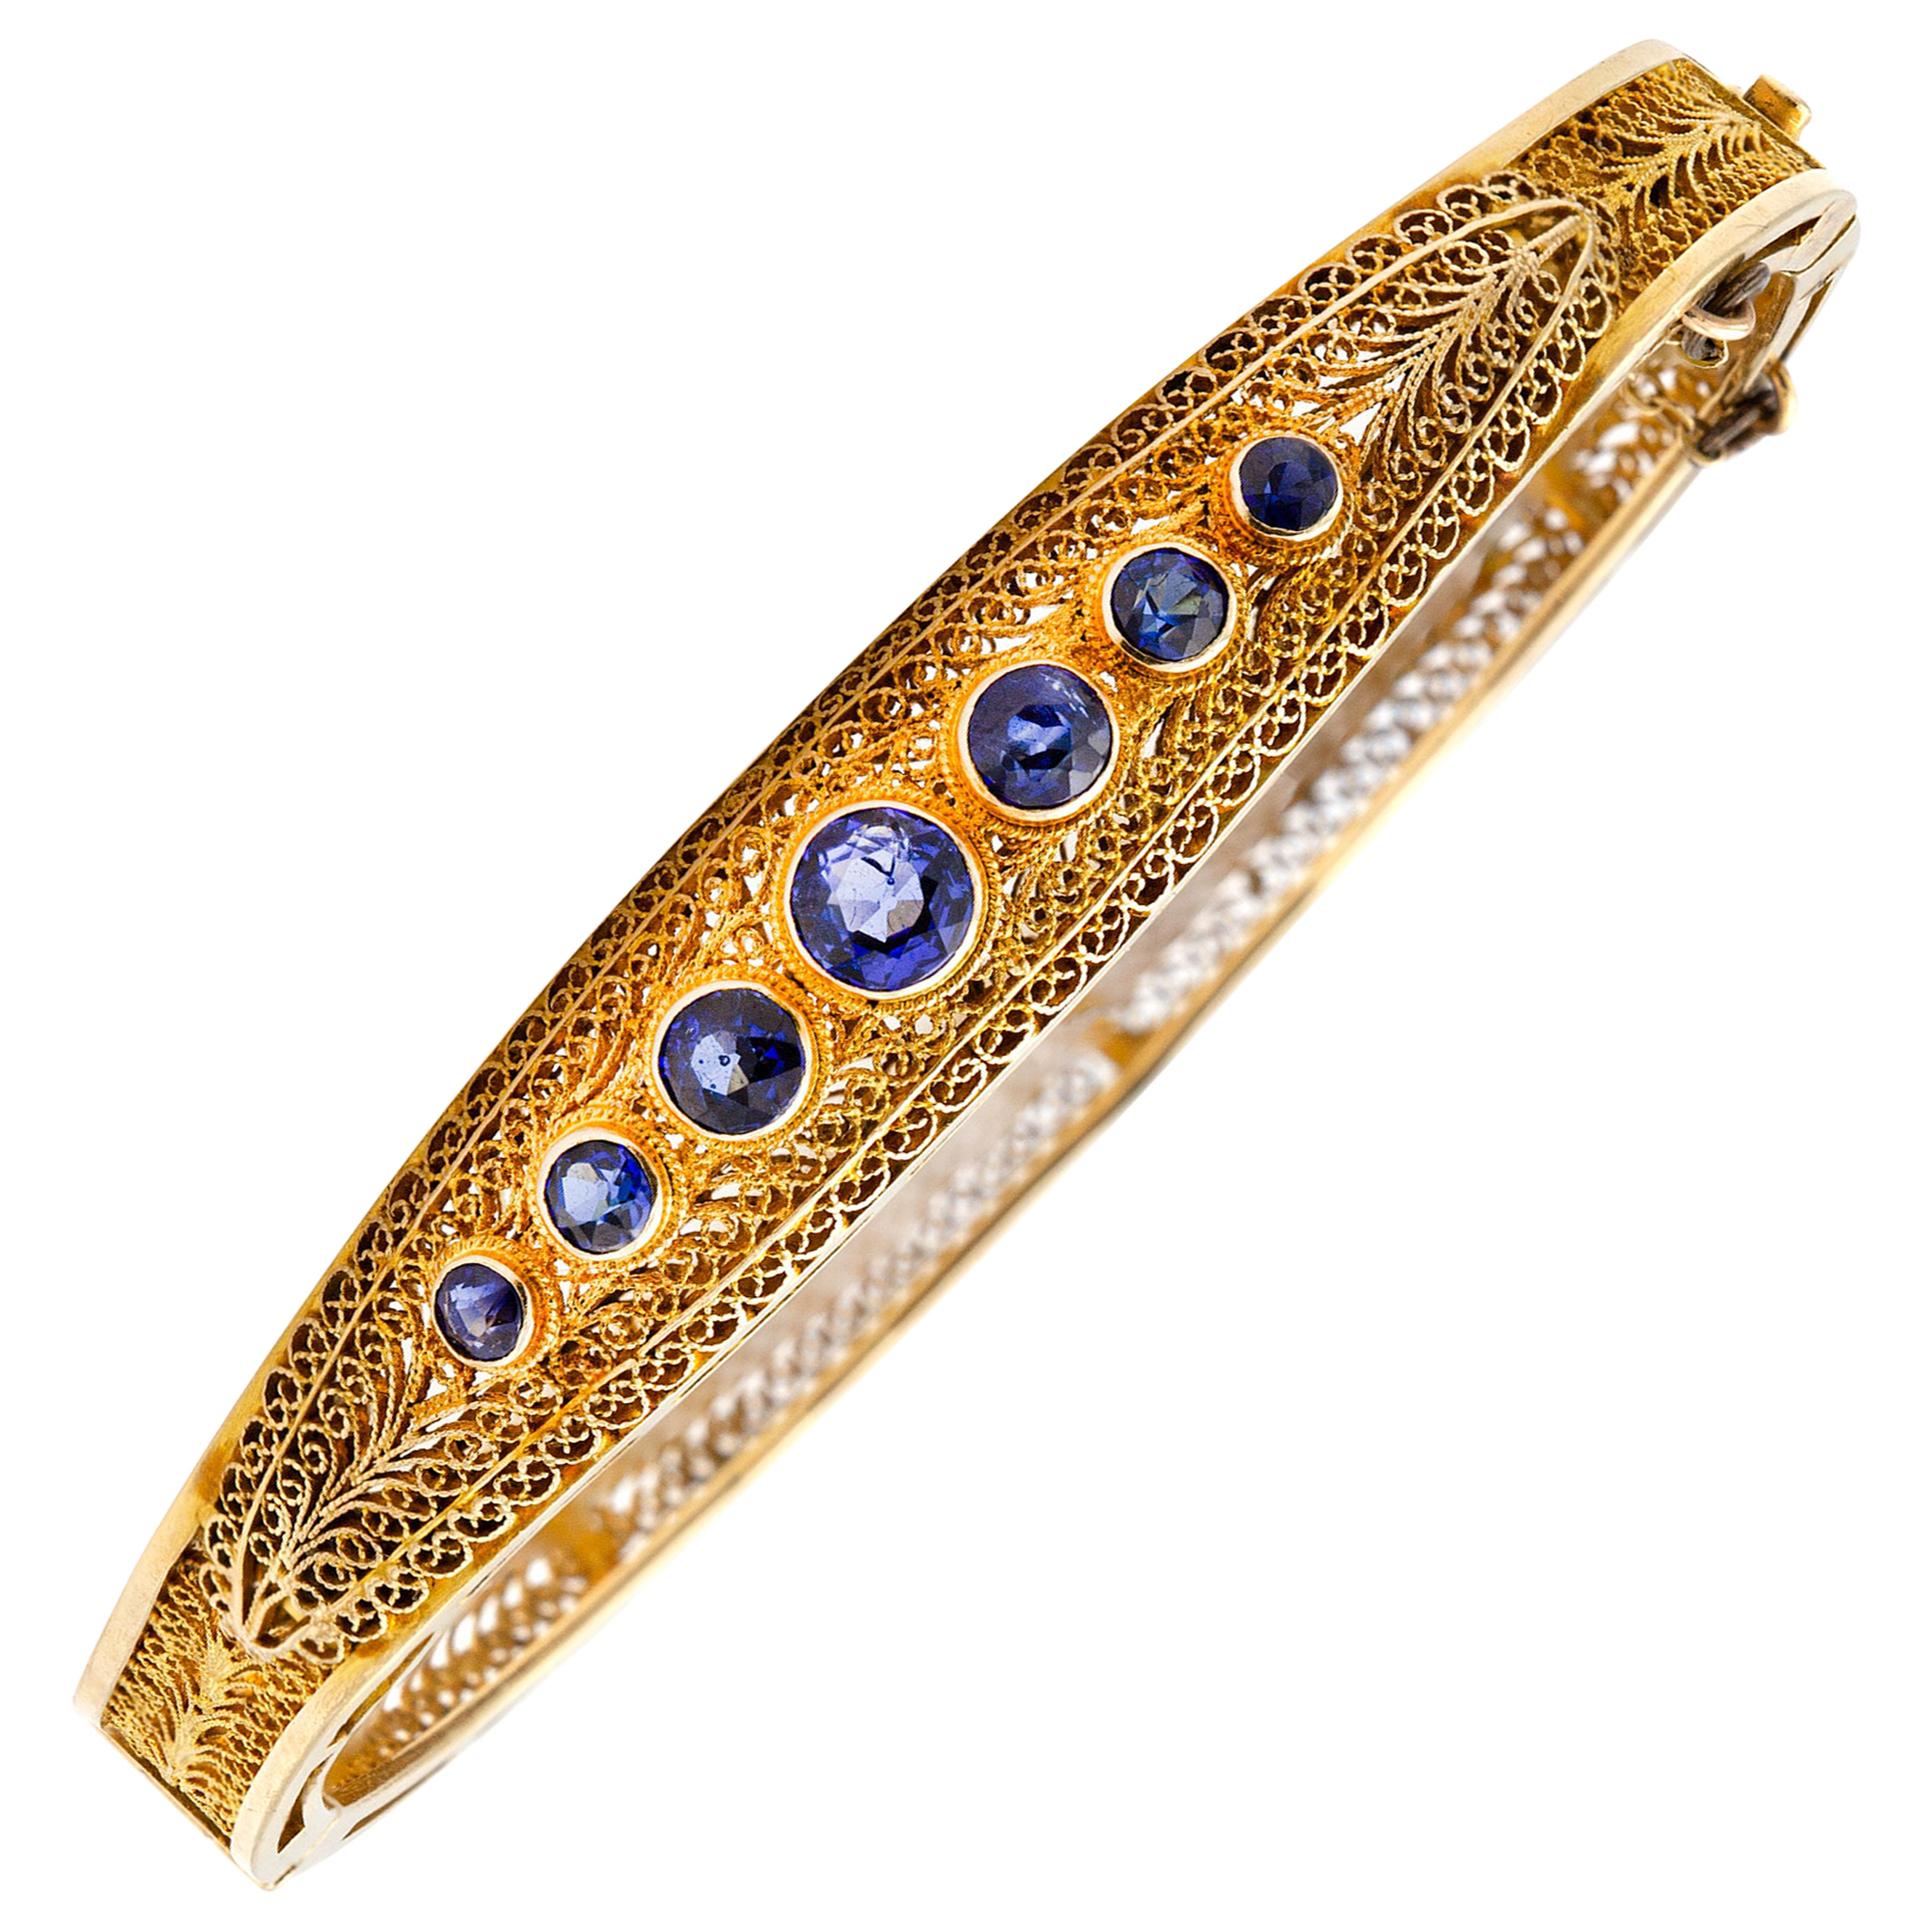 Art Deco 14k Gold Hinge Bracelet with Sapphires